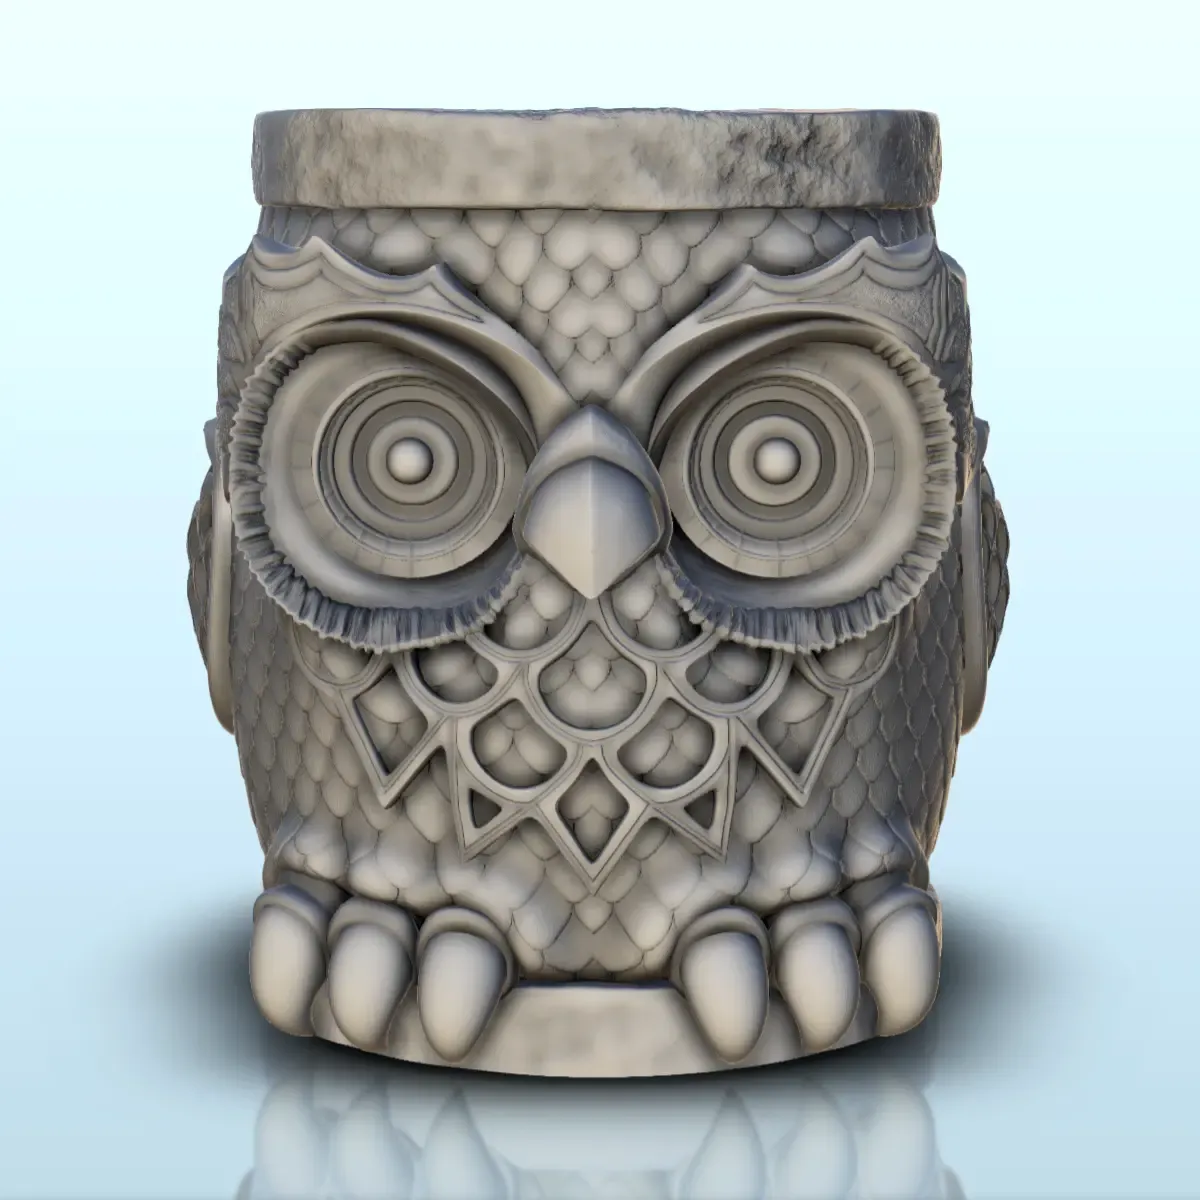 Owl dice mug (20) - beer can holder